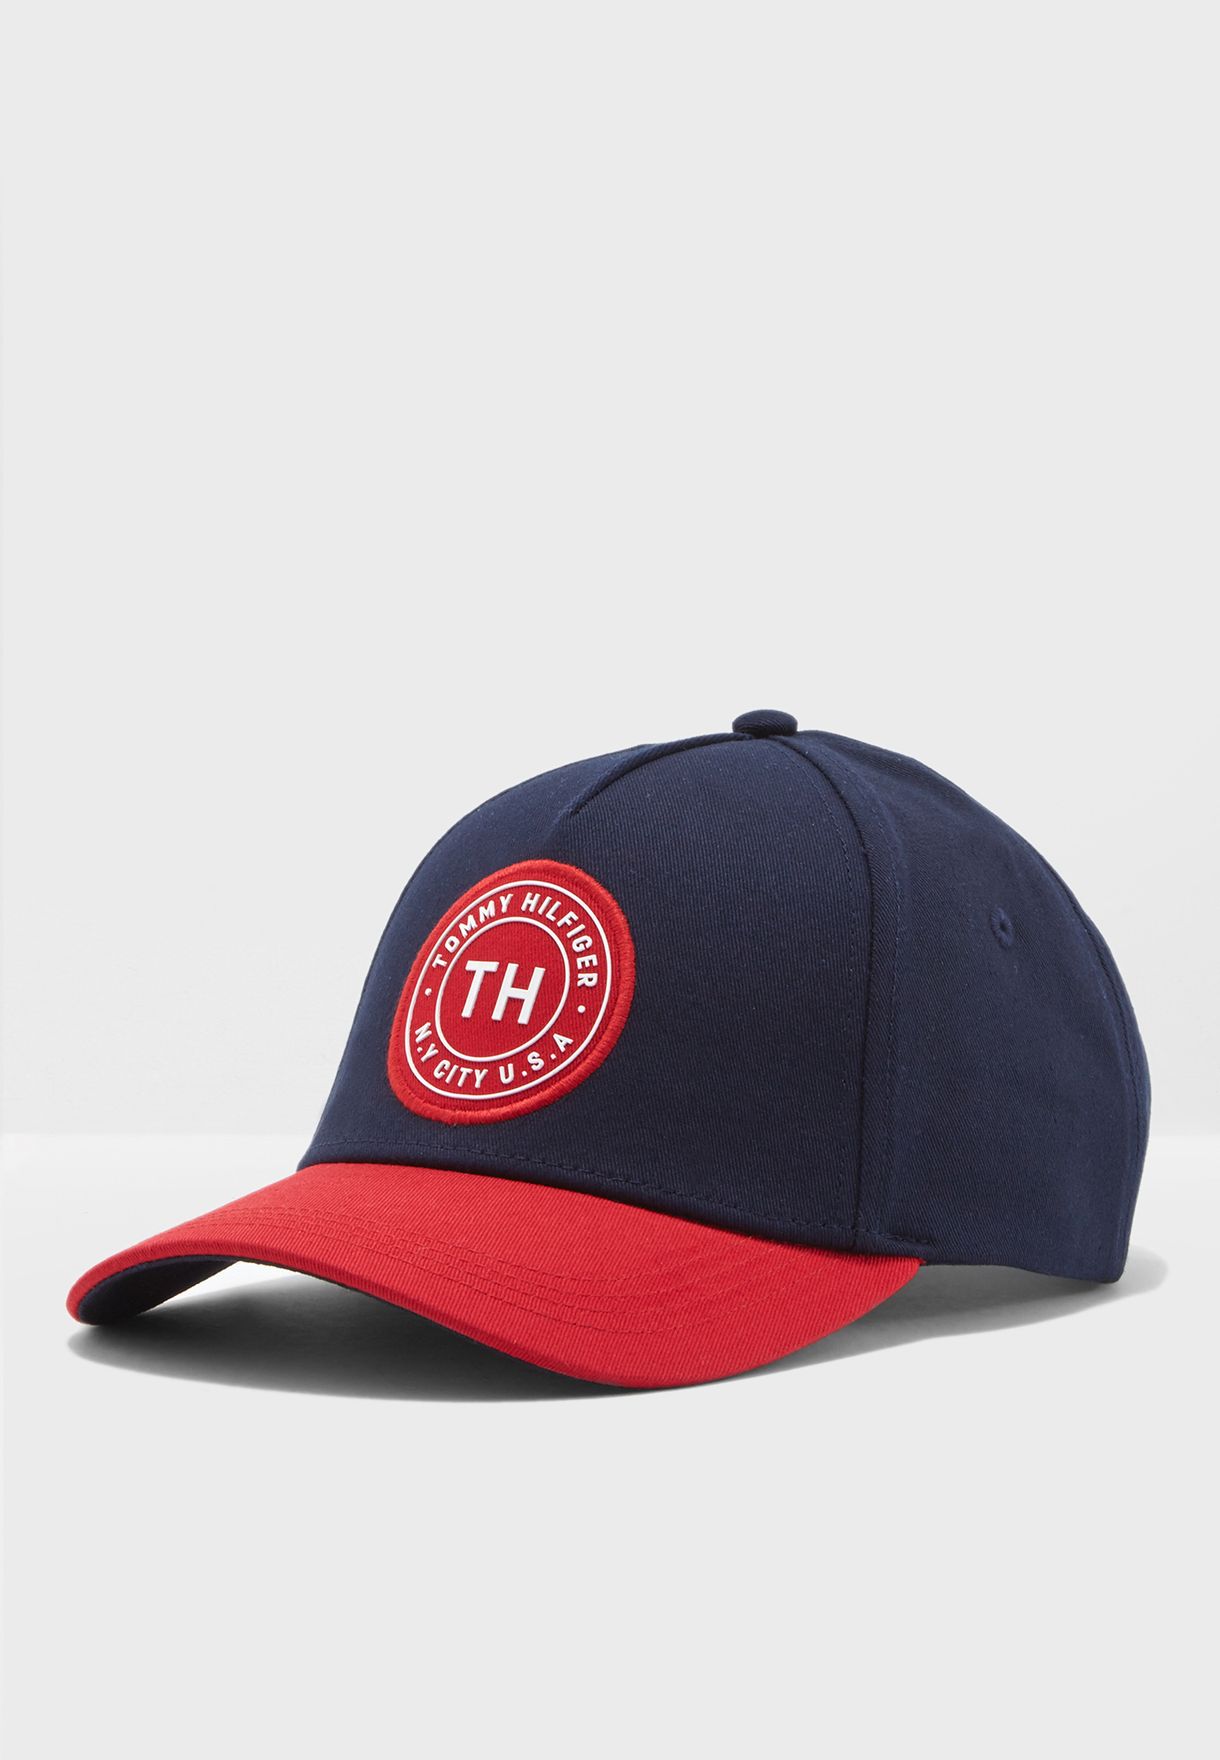 tommy hilfiger badge cap